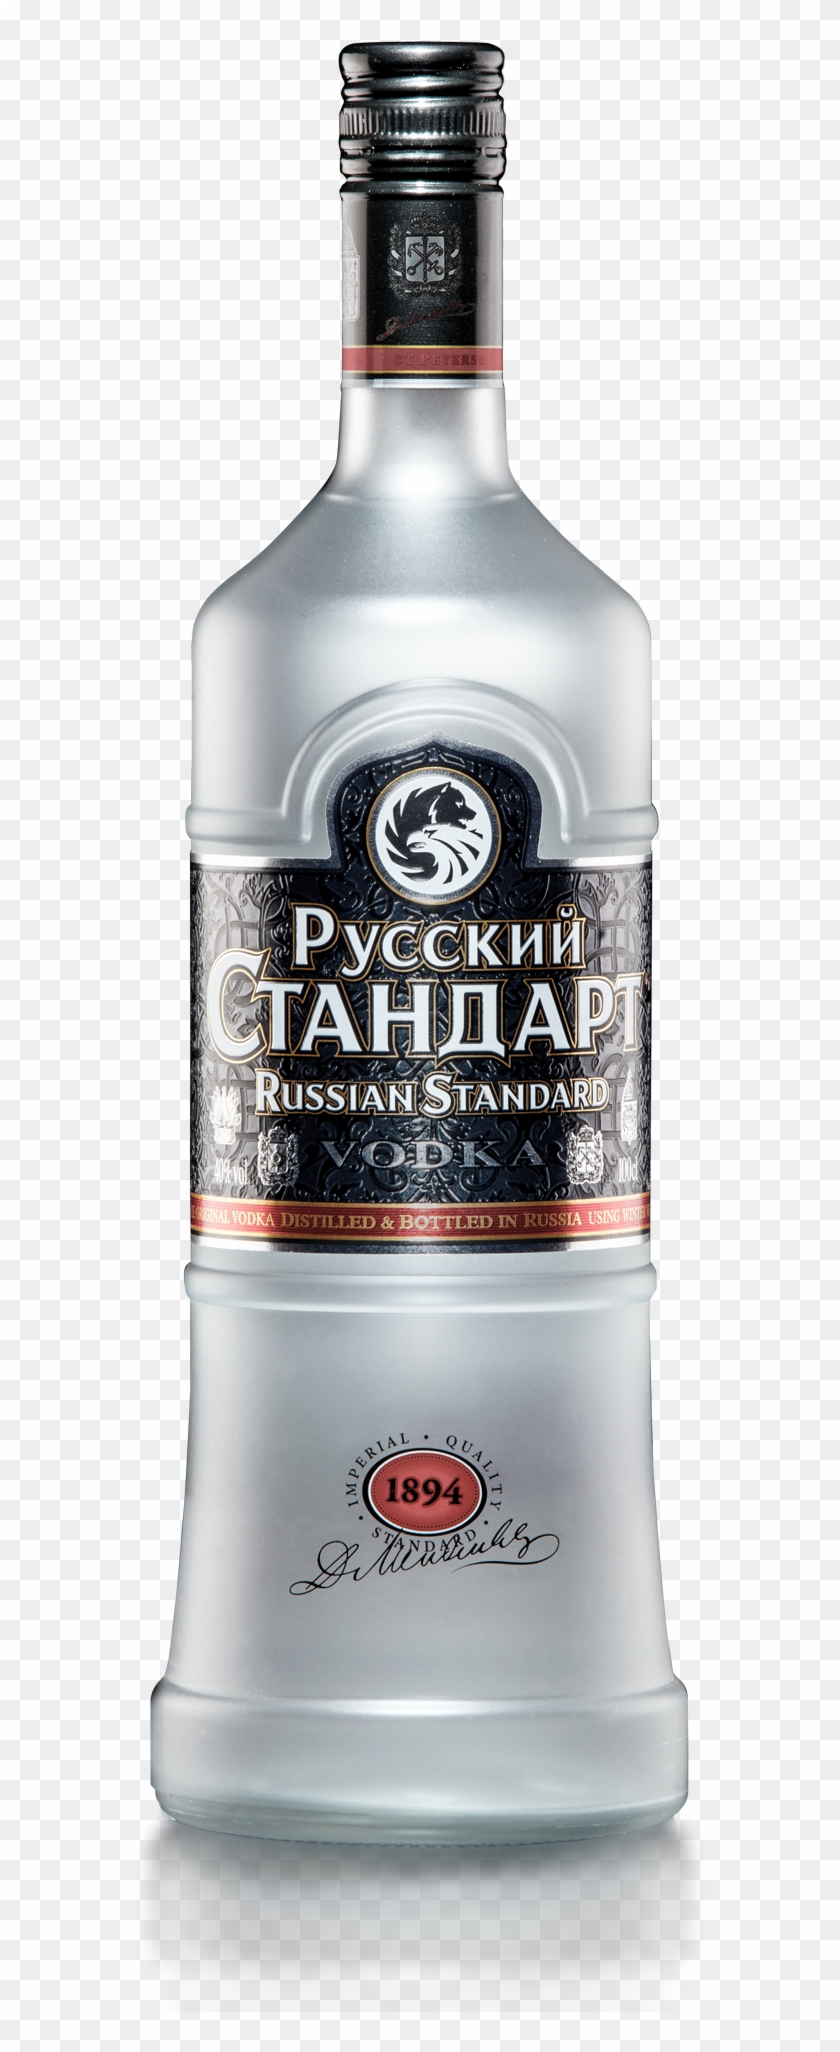 Russian Standard Vodka - Russian Standard Bottle Png, Transparent Png ...